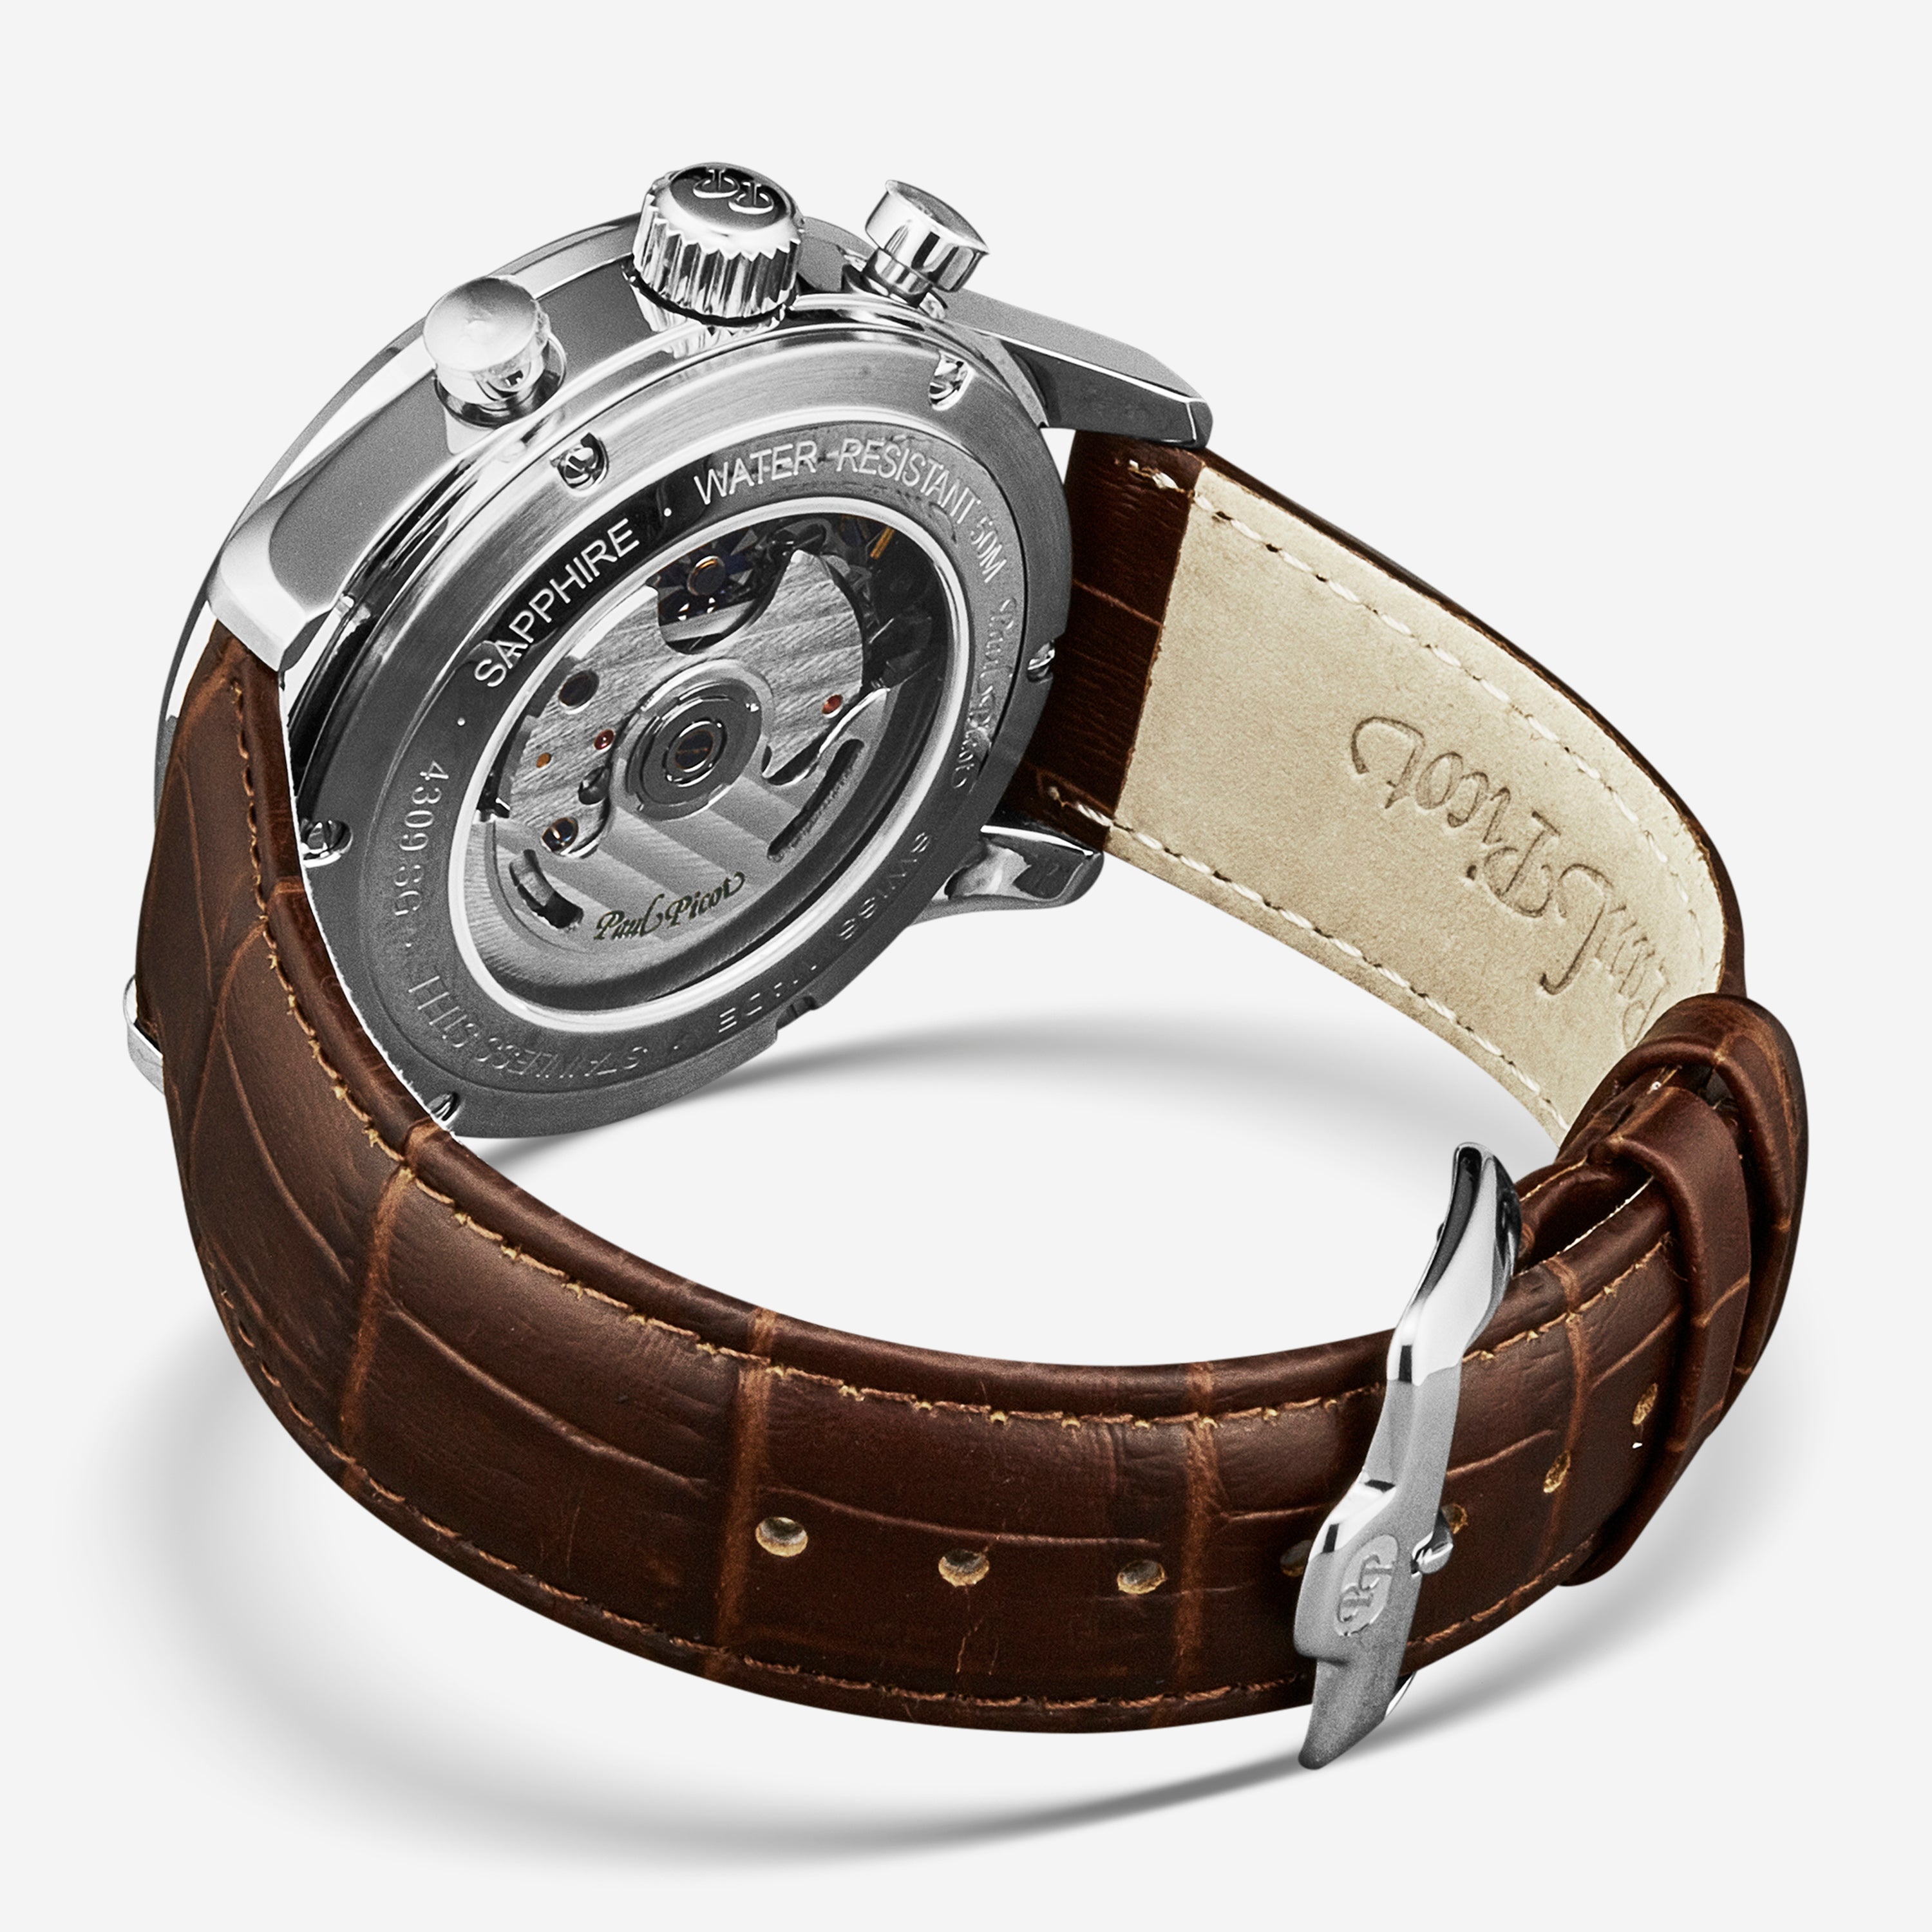 Paul Picot Gentleman Blazer Chronograph Green Dial Men's Automatic Watch P4309.SG.1021.6614